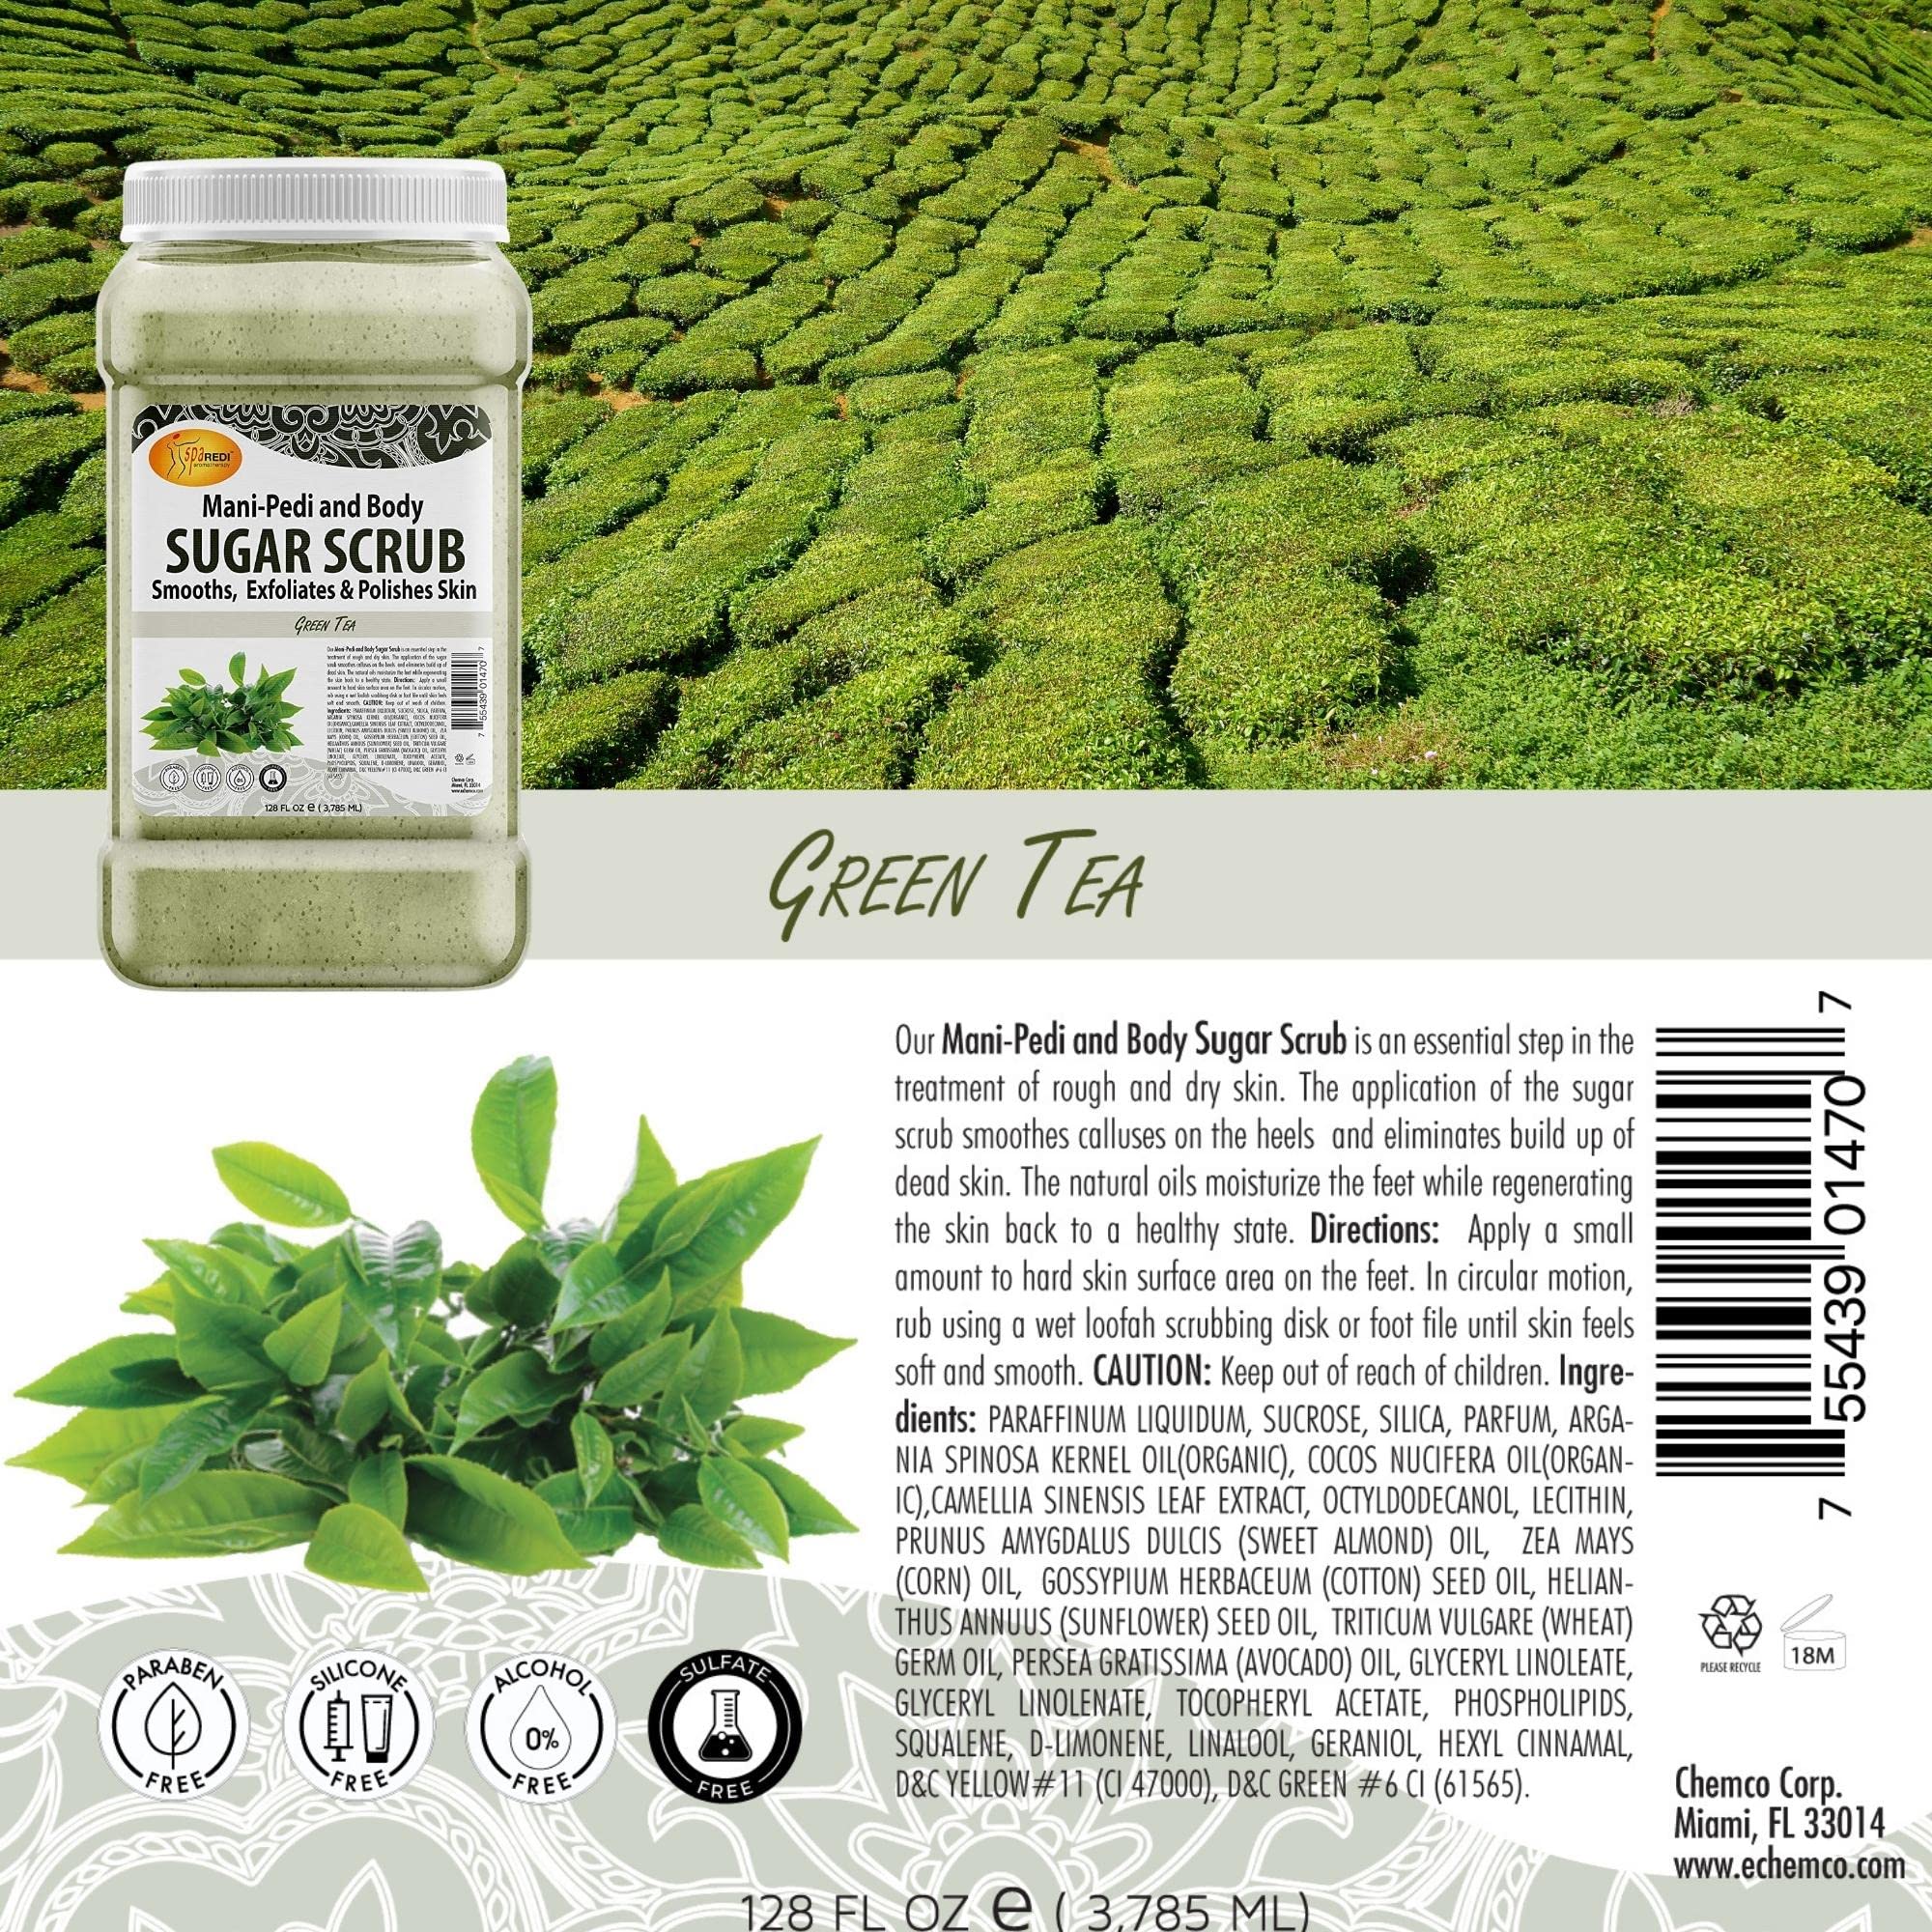 SPA REDI - Sugar Body Scrub, Green Tea, 128 Oz - Exfoliating, Moisturizing, Hydrating and Nourishing, Glow, Polish, Smooth and Fresh Skin - Body Exfoliator